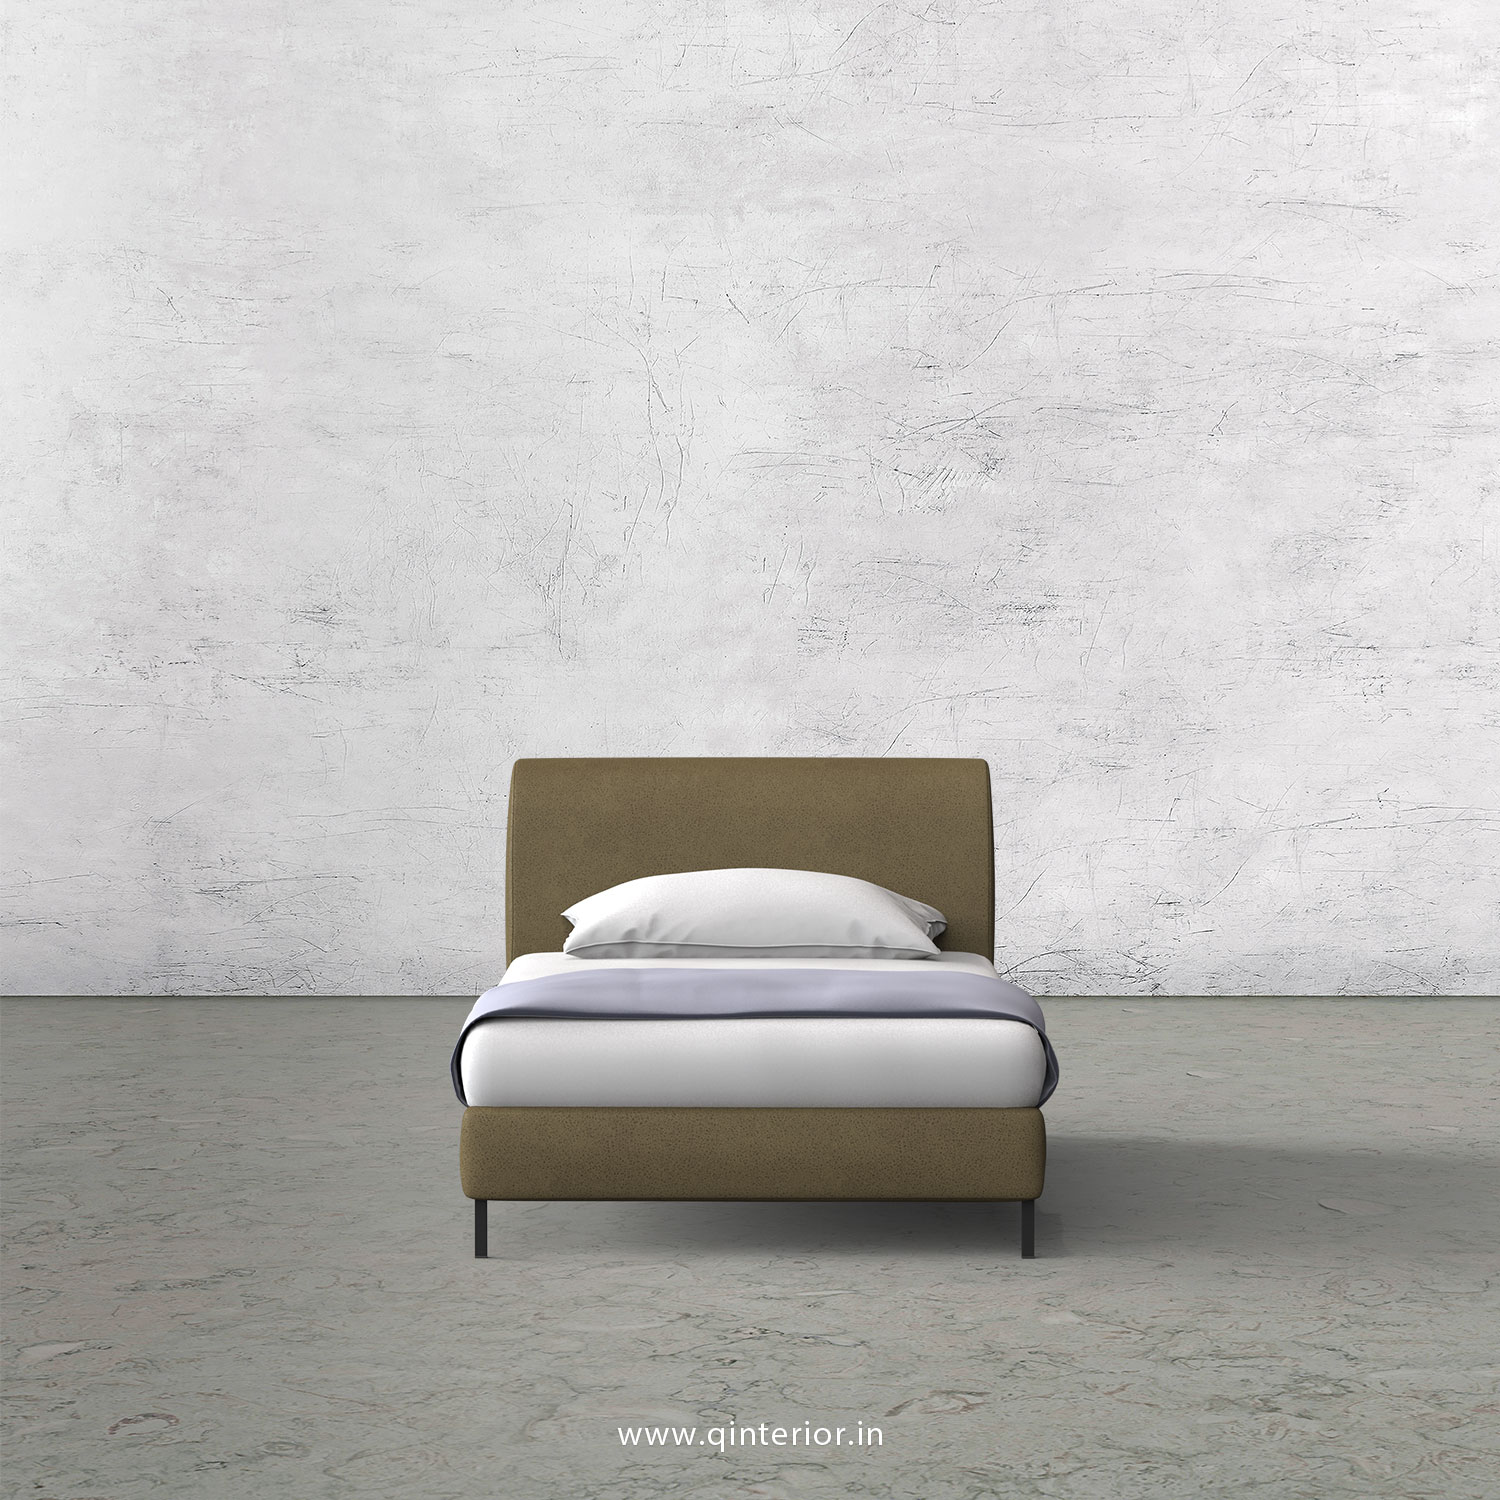 LUXURA Single Bed in Fab Leather – SBD003 FL01